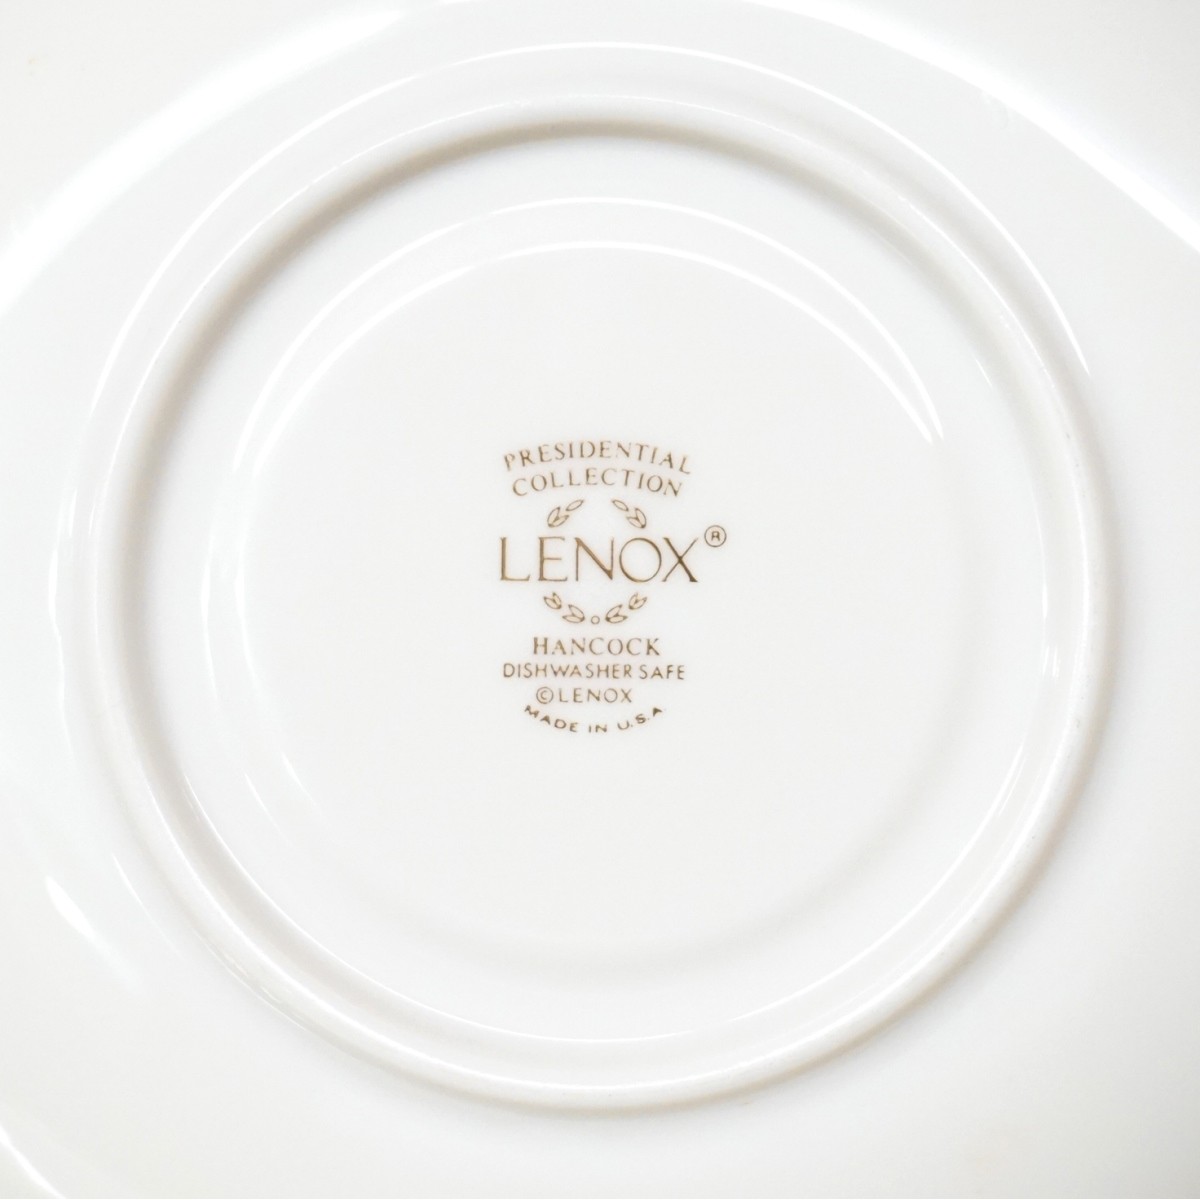 Lenox Dinner Service